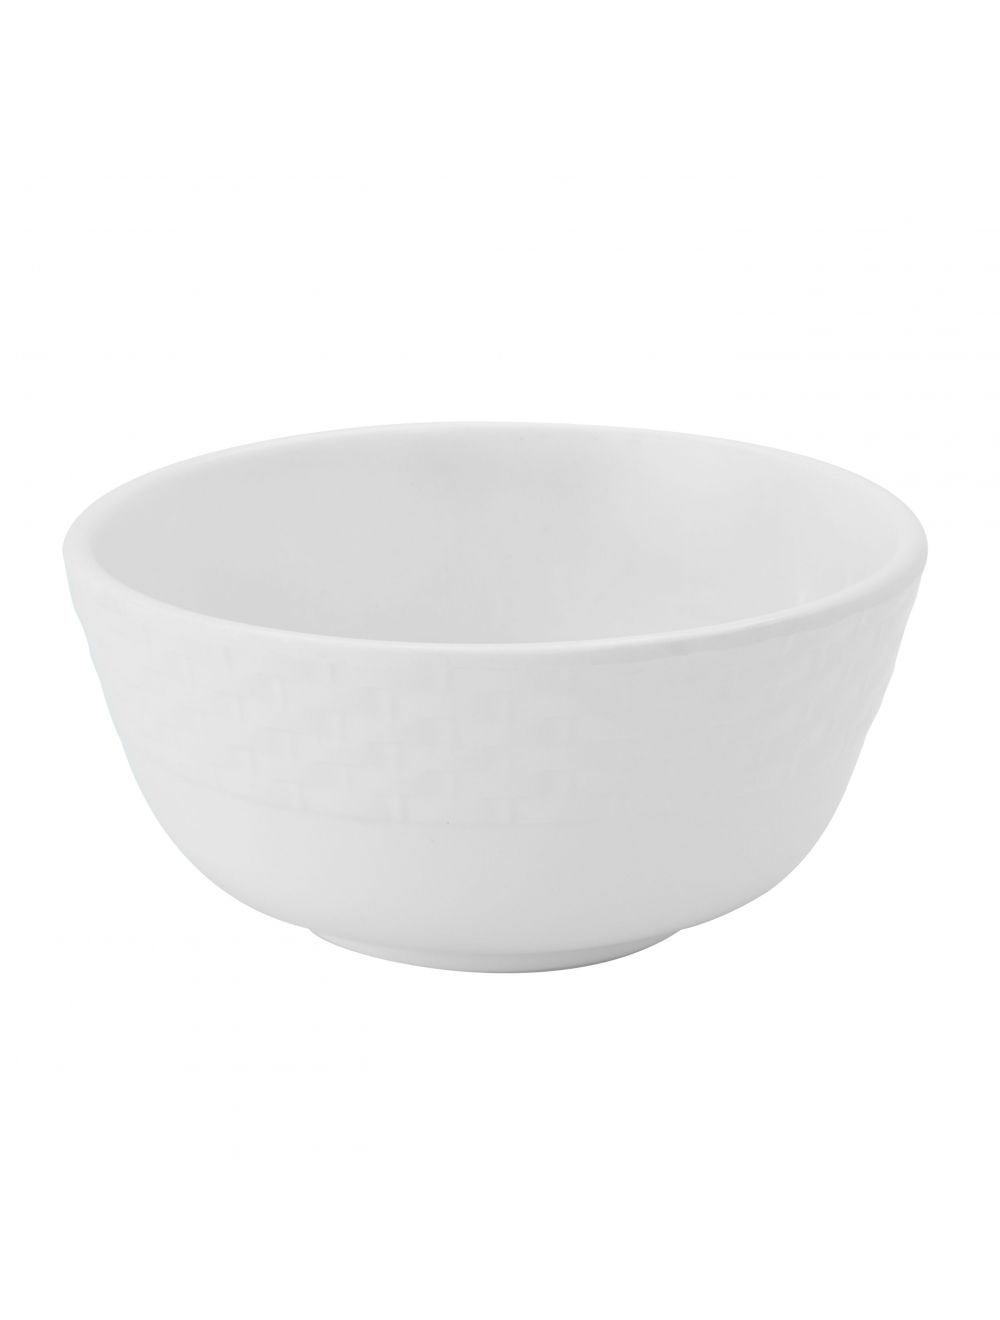 Dinewell Melamine Side Bowl White Topaz-DWB9002W